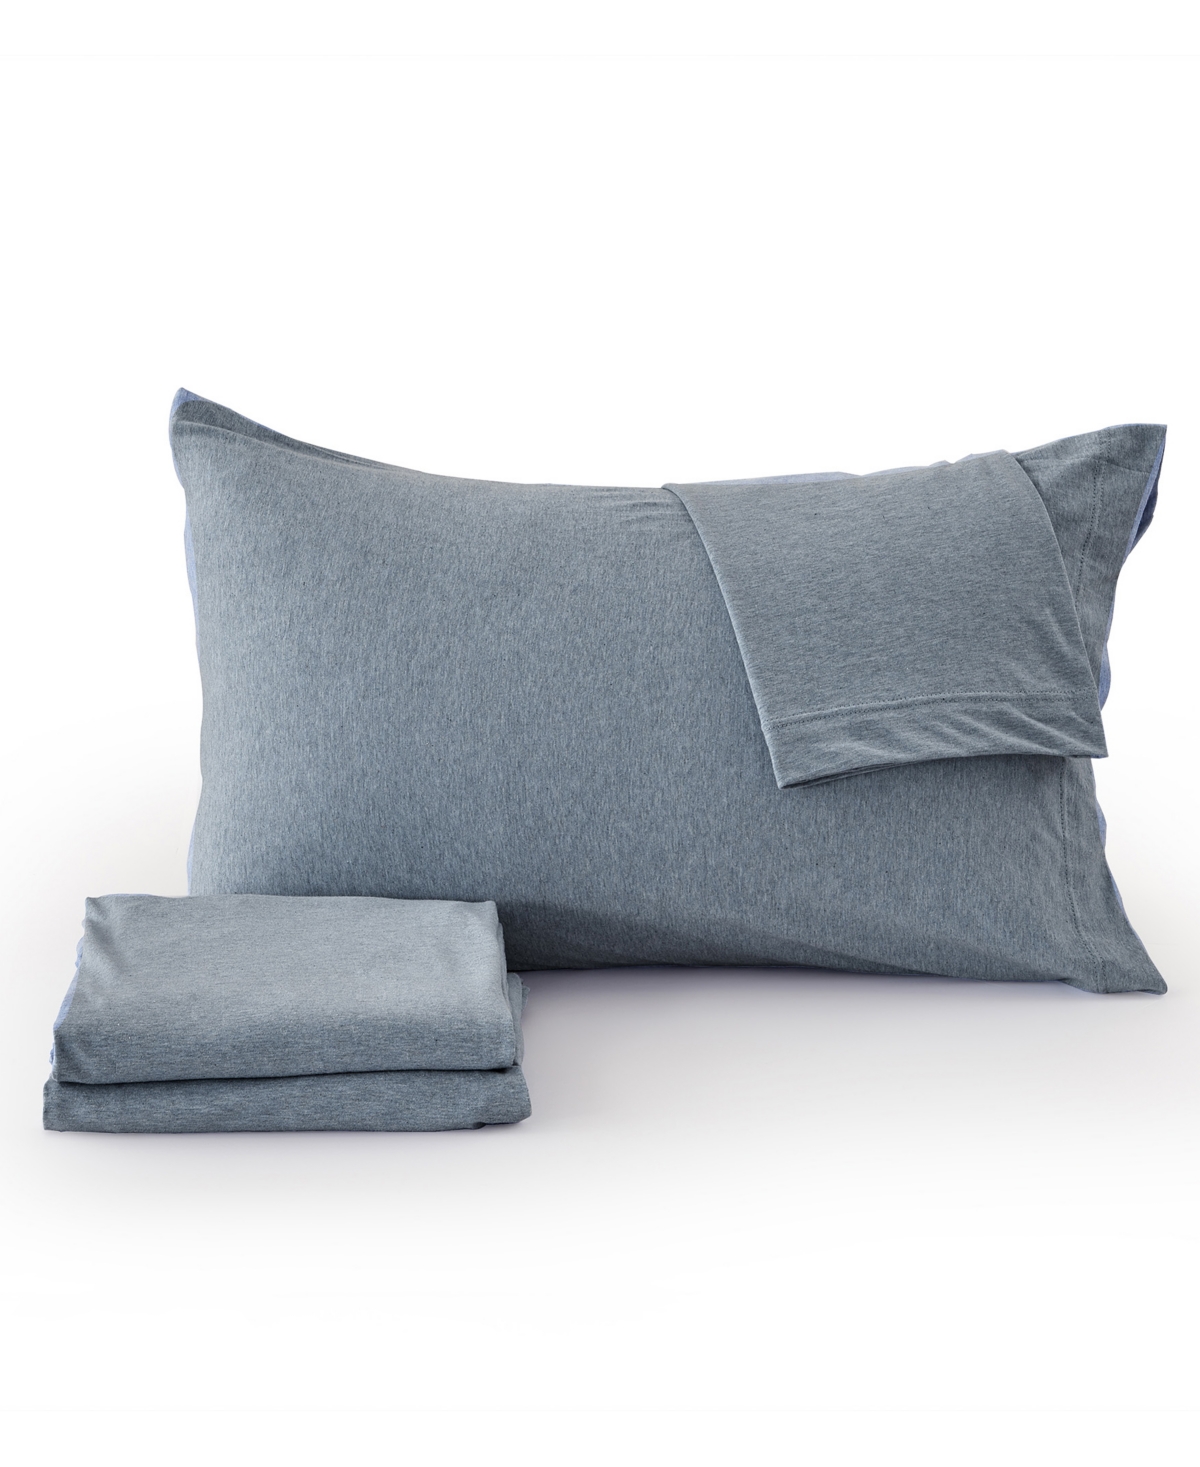 Premium Comforts Heathered Melange T-shirt Jersey Knit Cotton Blend 4 Piece Sheet Set, King In Heathered Denim Blue